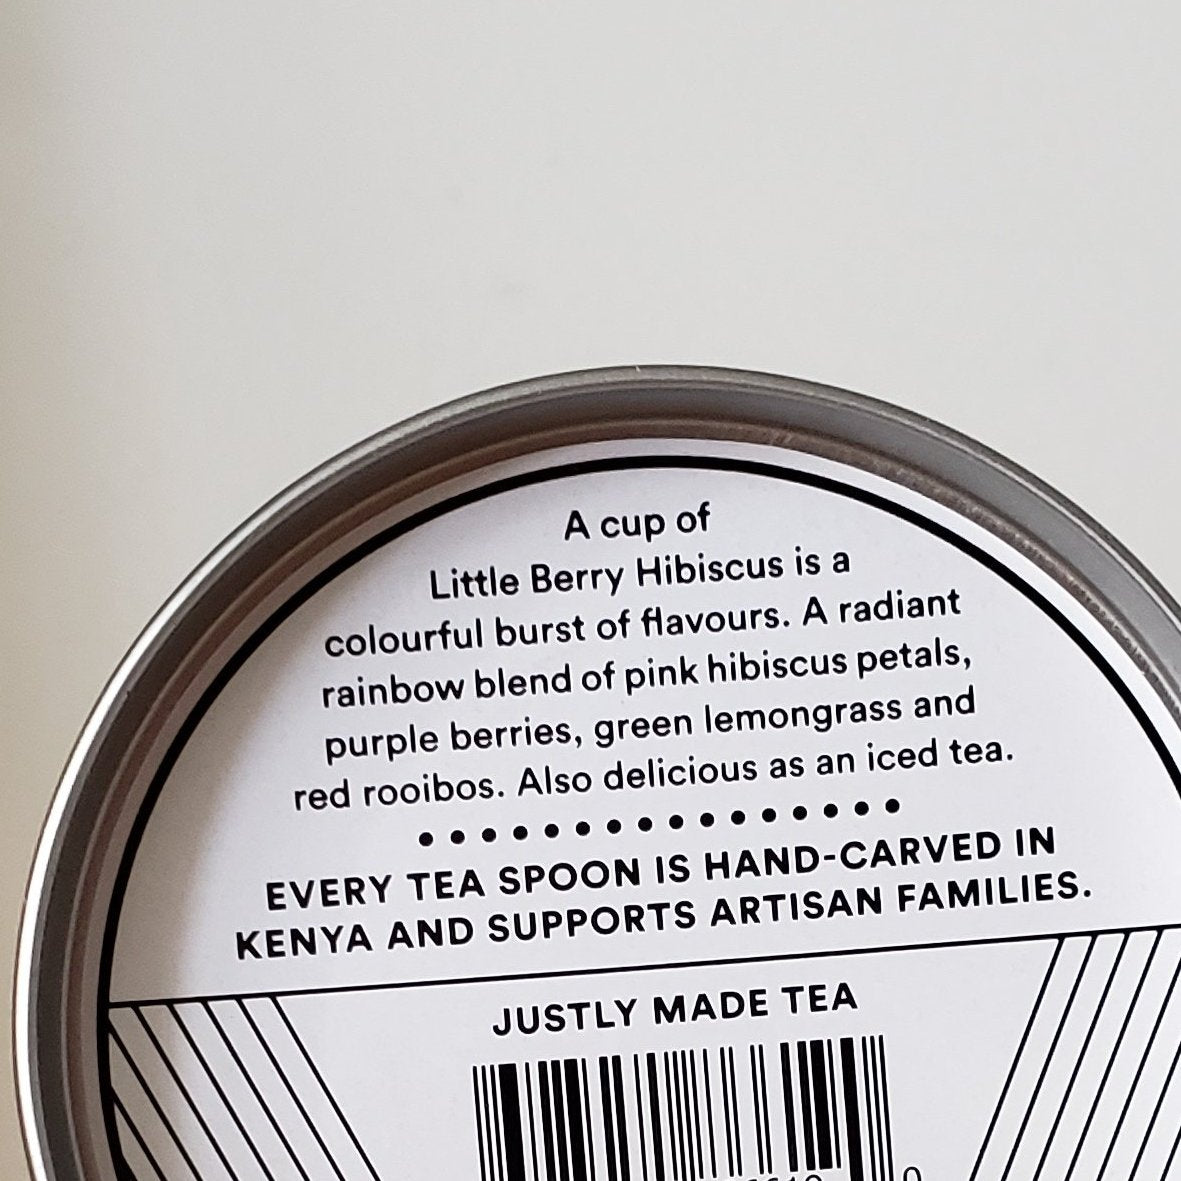 JusTea Little Berry Hibiscus Loose Leaf Tea